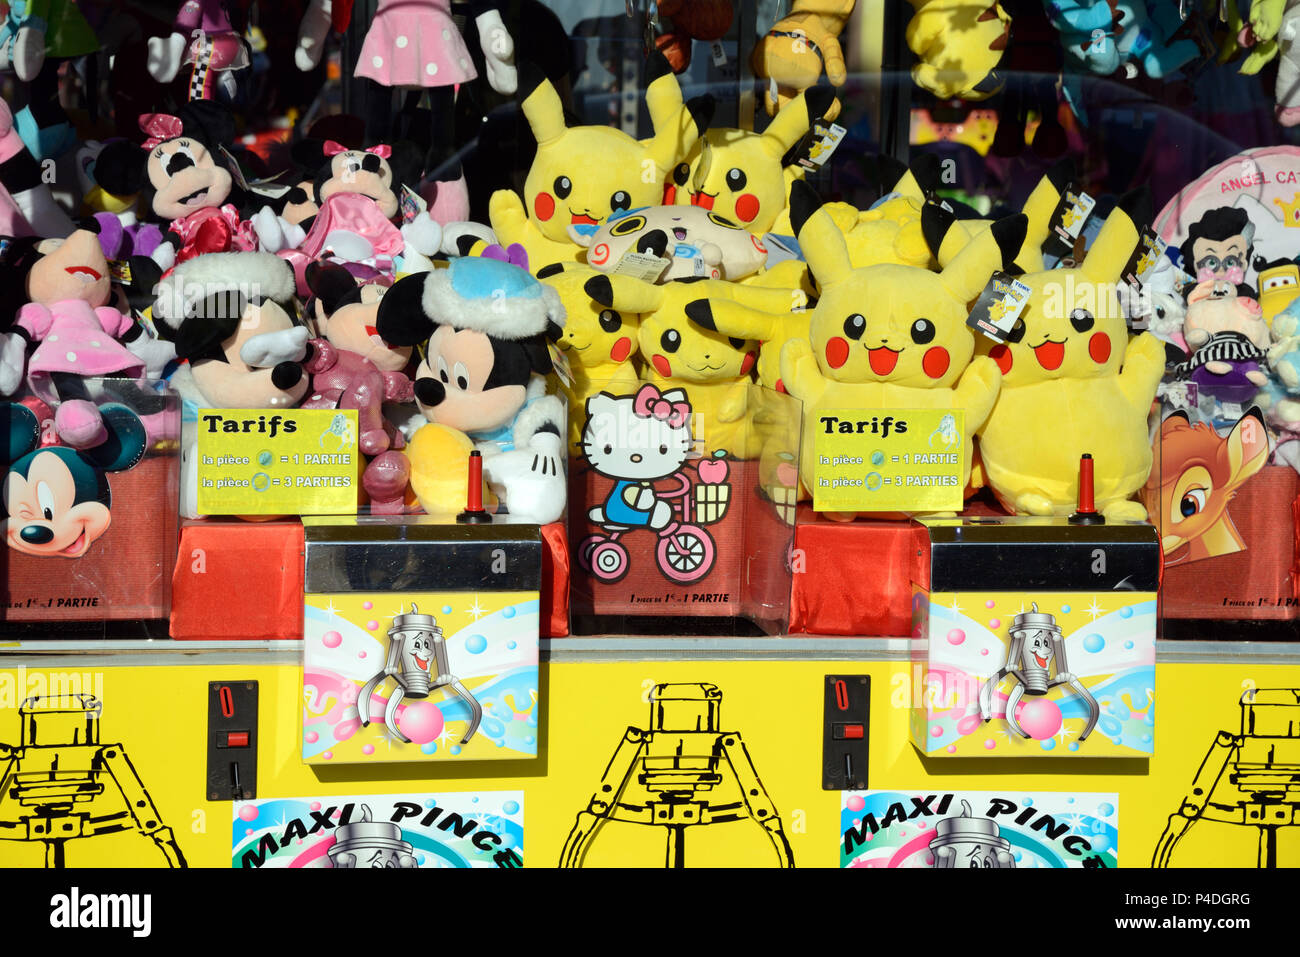 Pikachu Cuddly Toys, Disney Toys & Pokemon as Fun Fair Prizes on Side Stall Game of Travelling Funfair Stock Photo